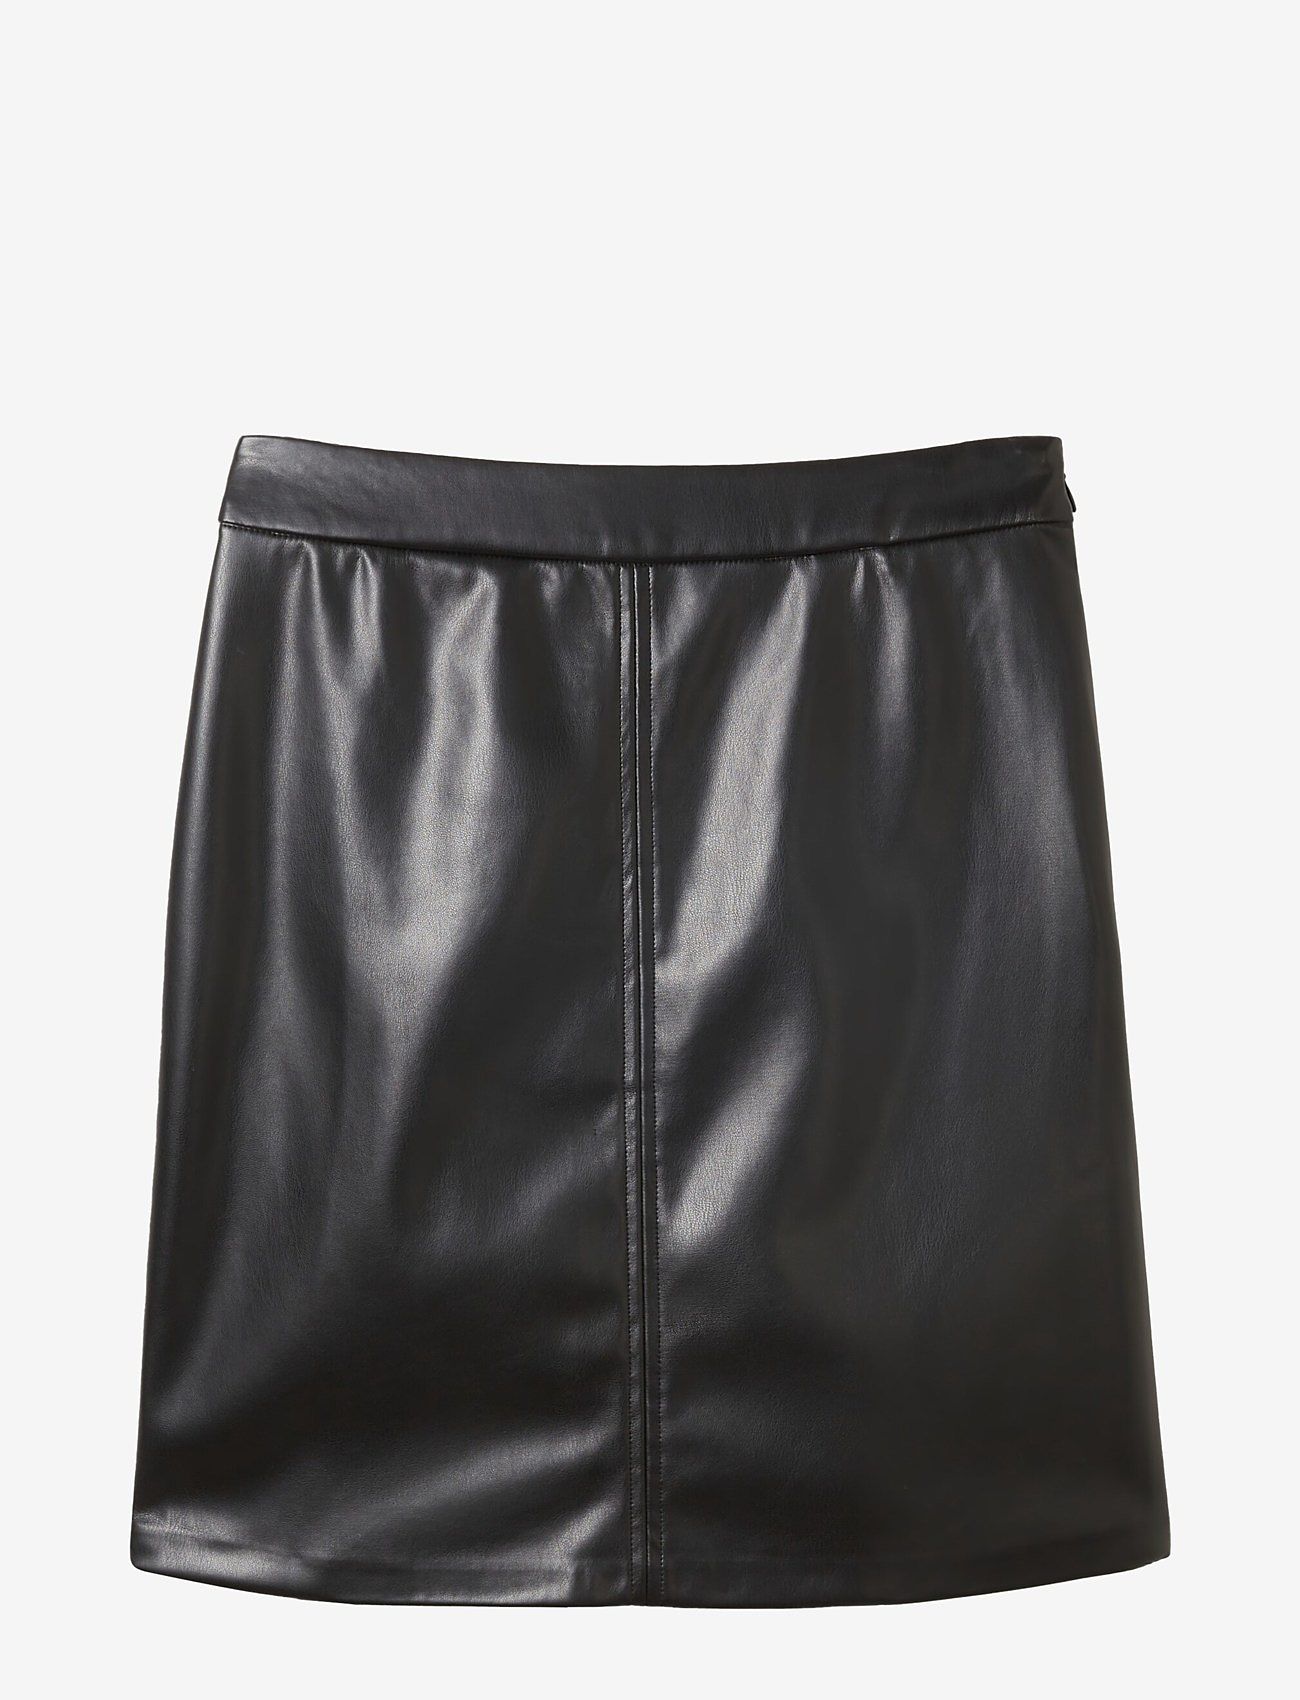 Tom Tailor - skirt fake leather - korta kjolar - deep black - 0